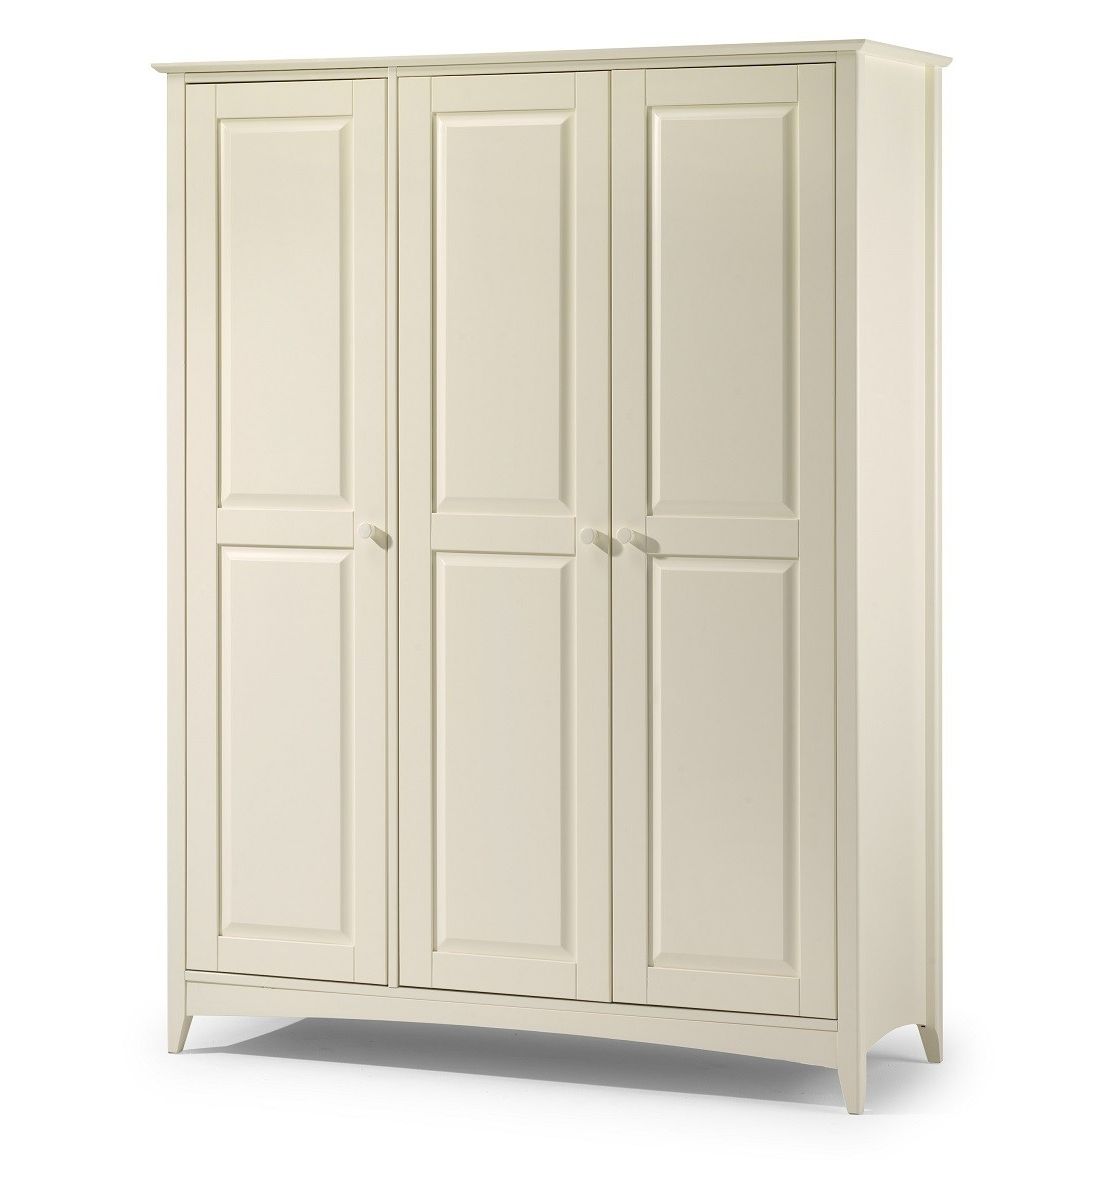 Oak Furniture Uk With Regard To White Three Door Wardrobes (View 13 of 15)